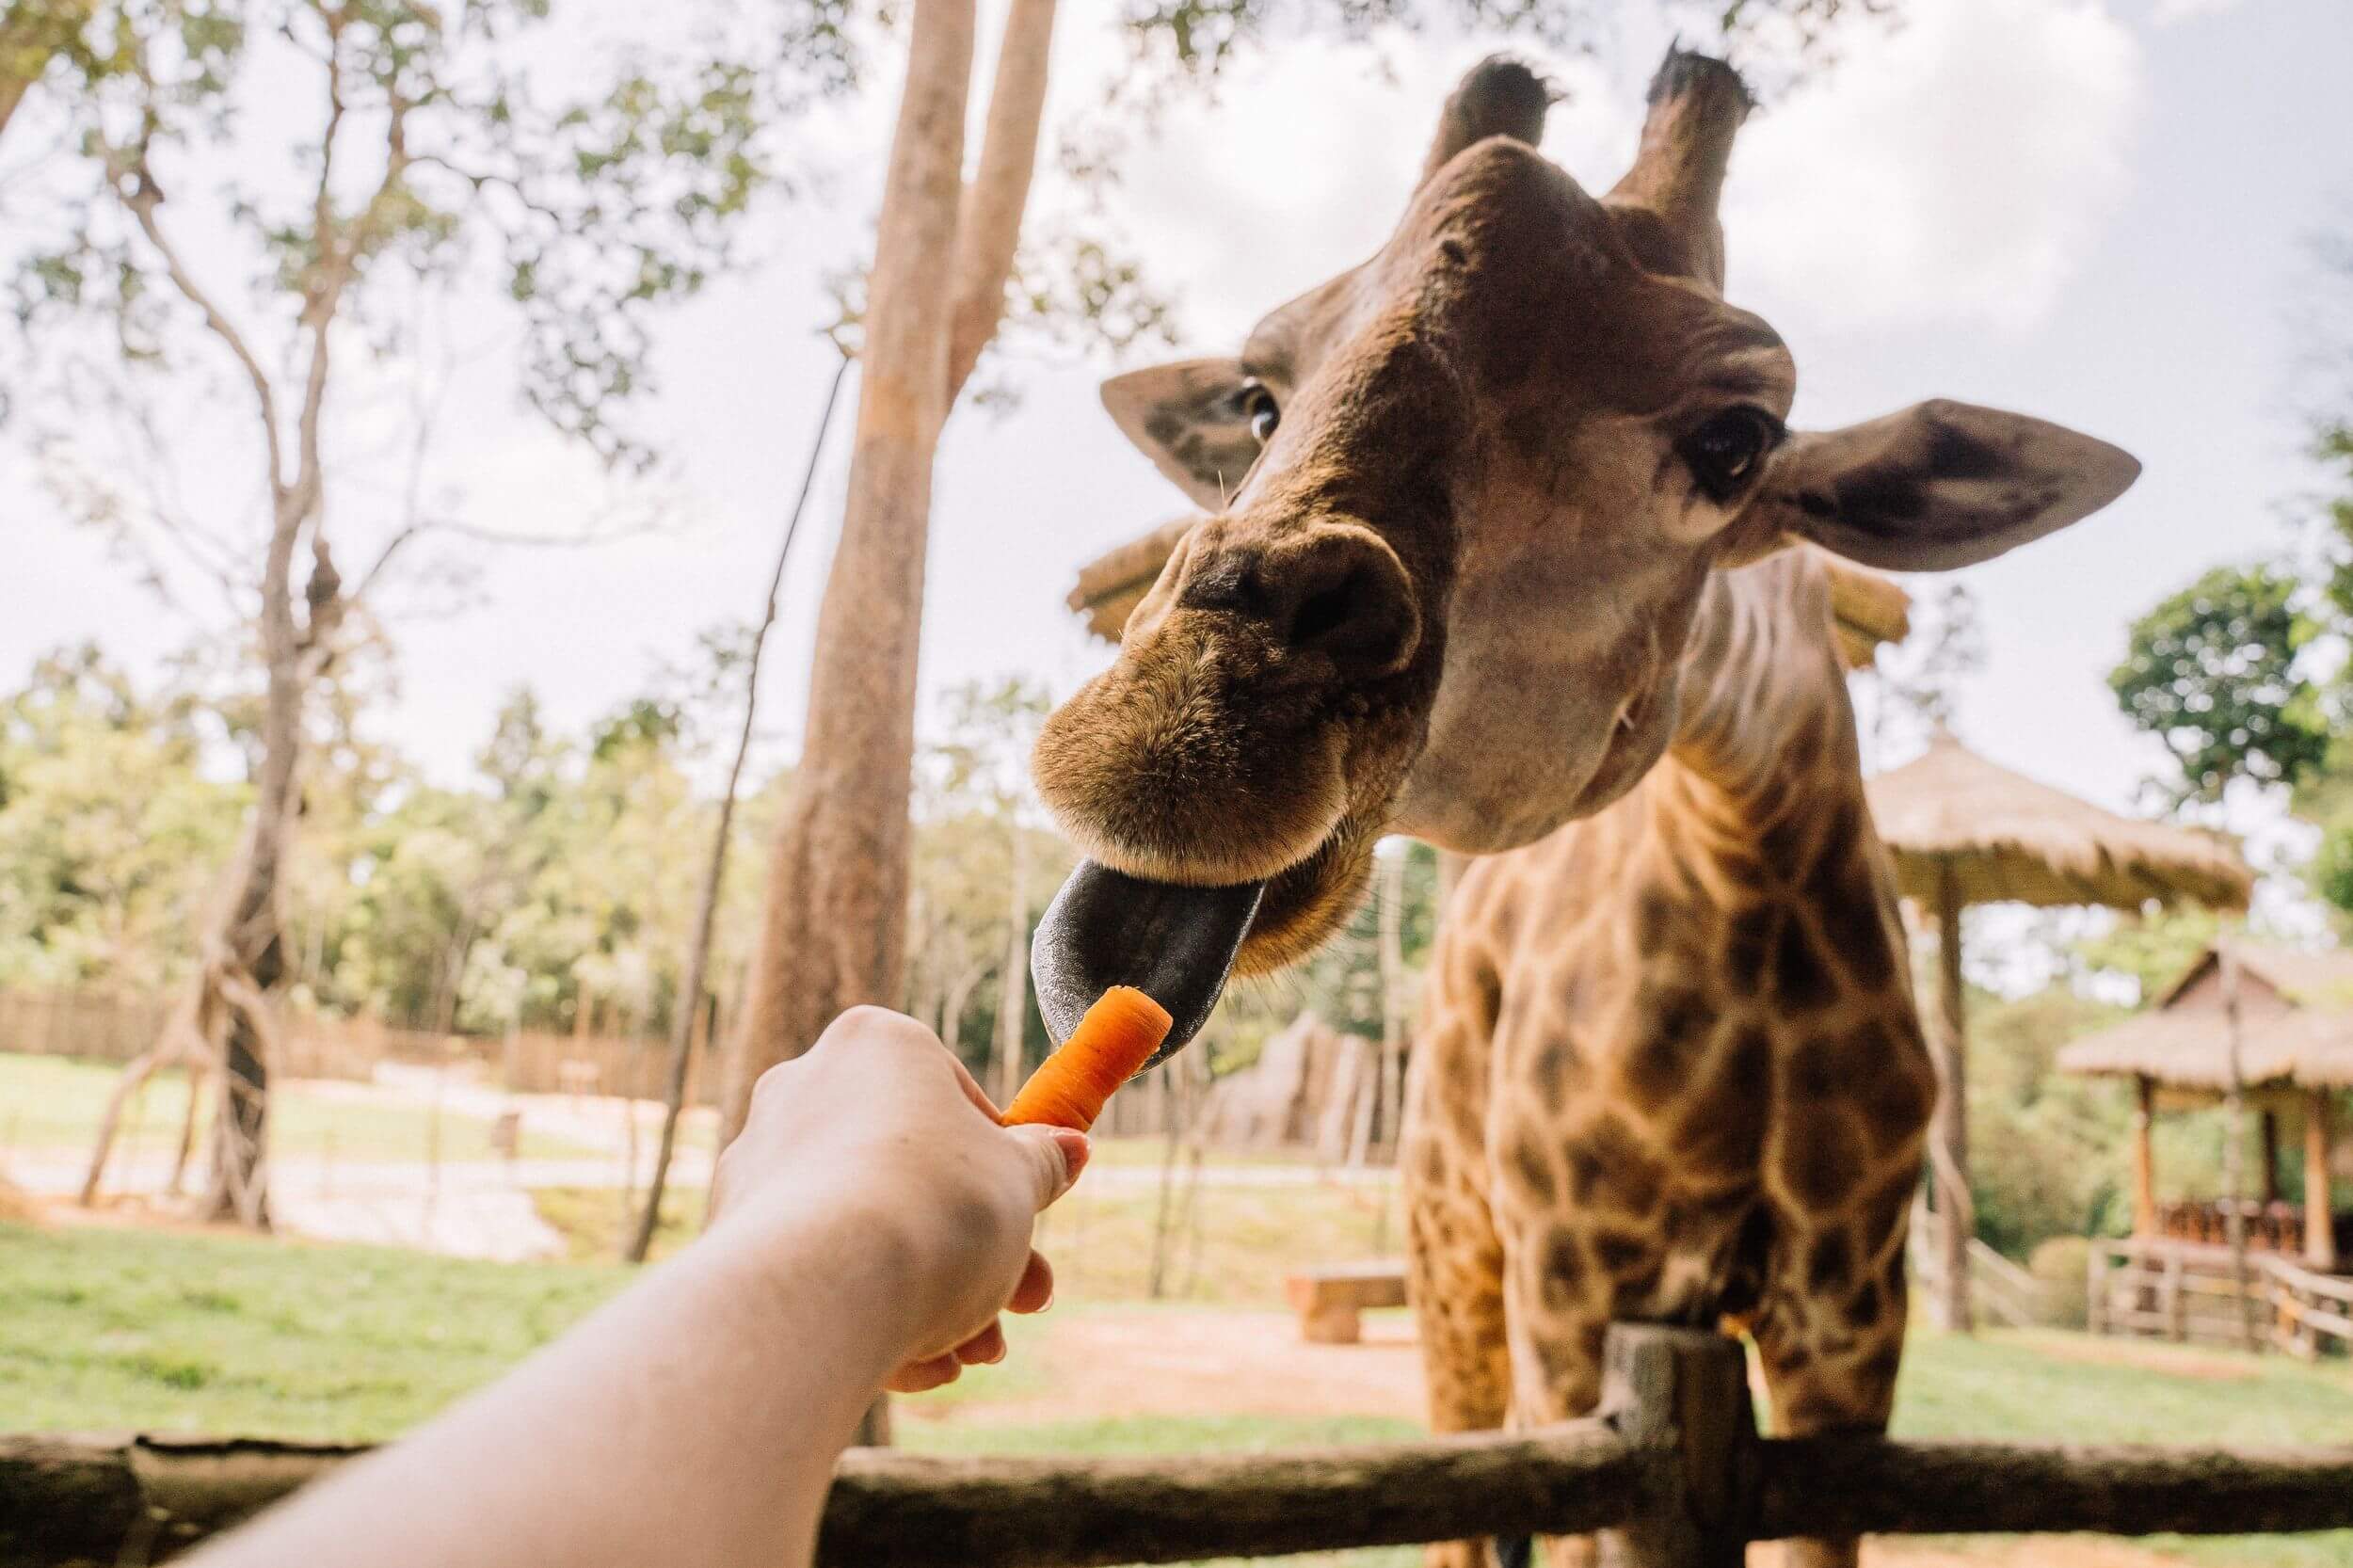 Person feeding a giraffe a carrot.